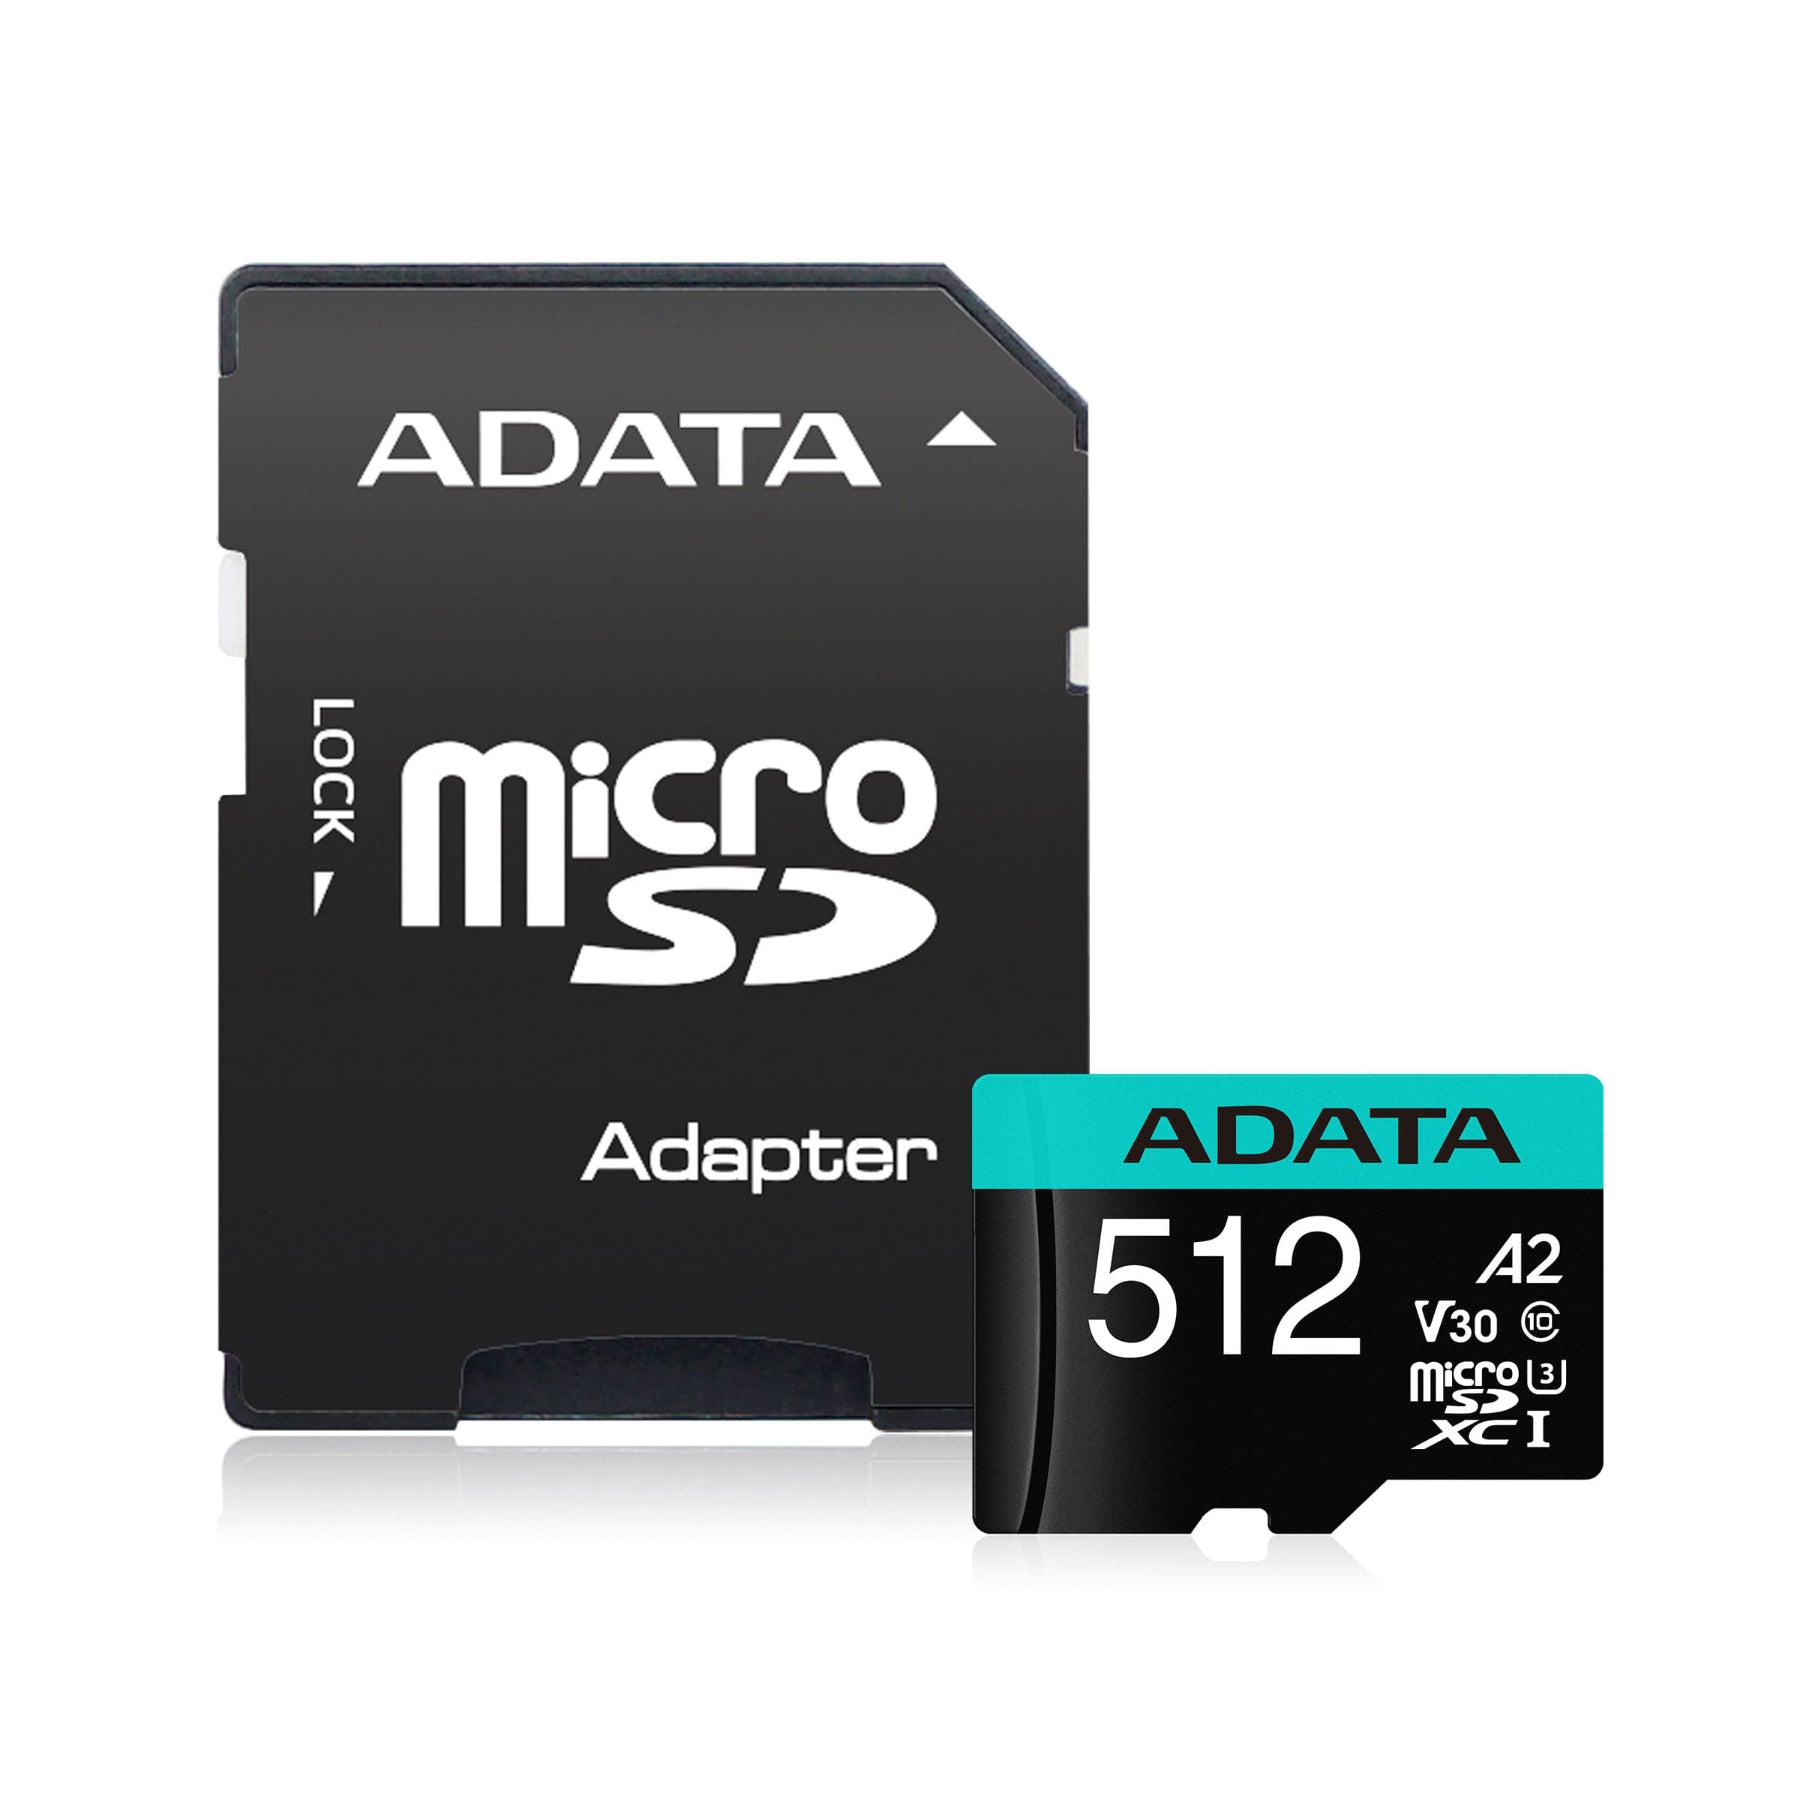 Hire Adata 512gb Micro SD Card V30 at Topic Rentals